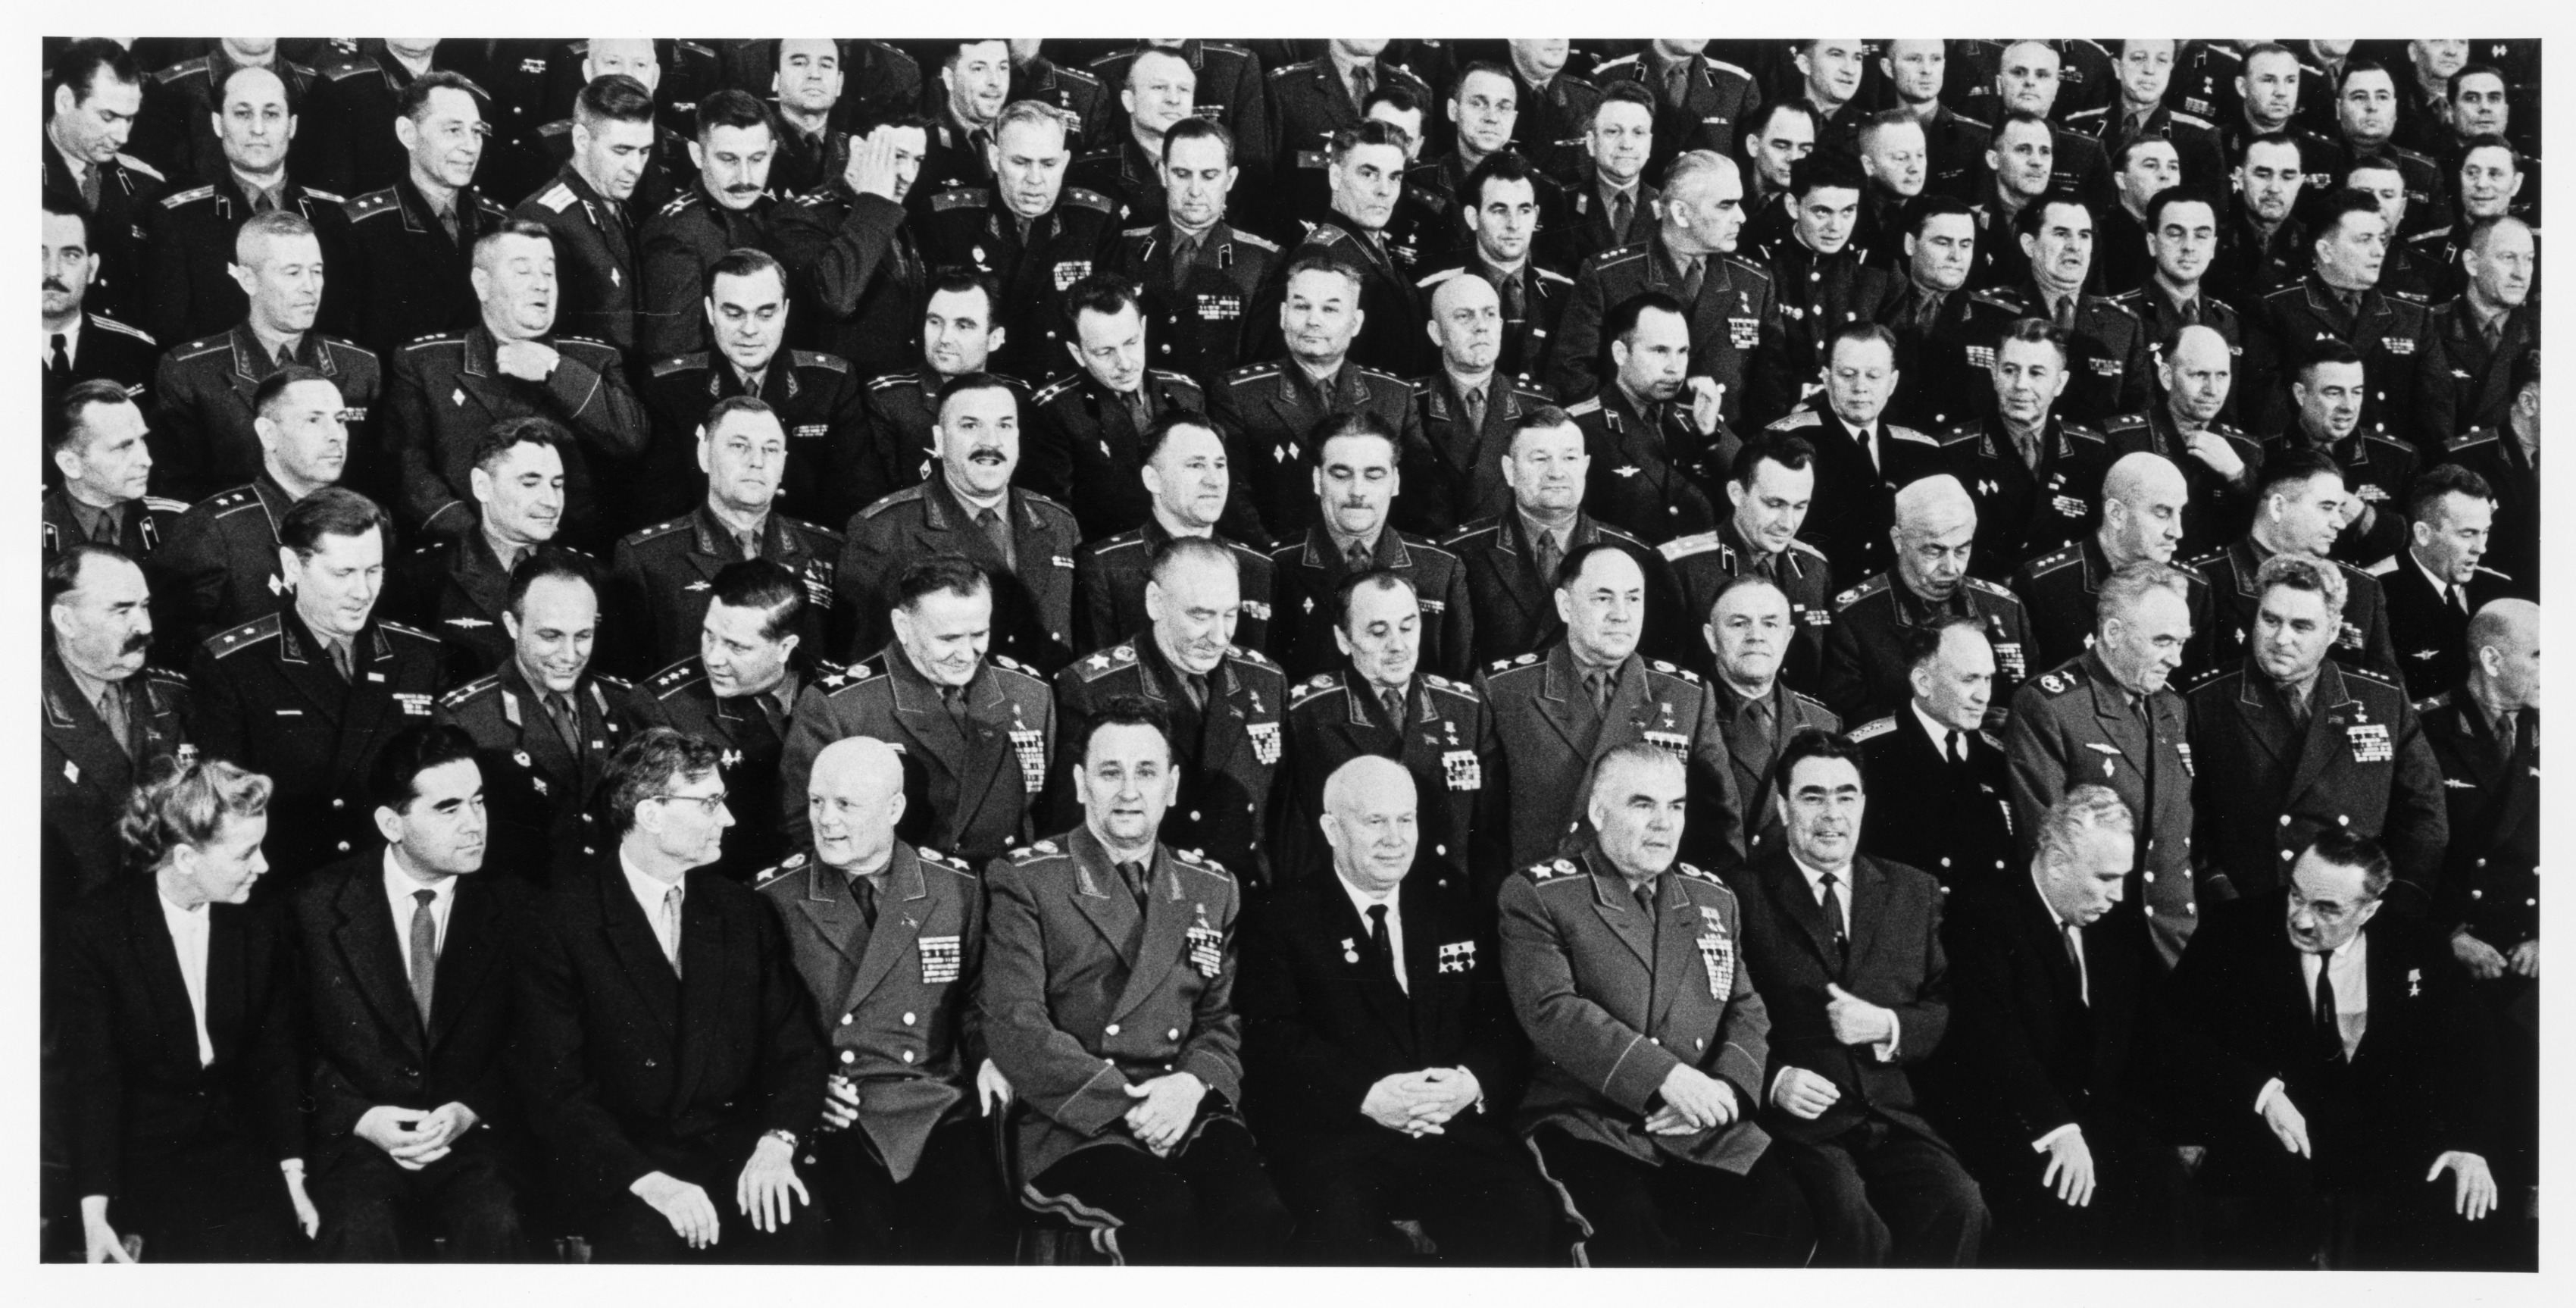 Khrushchev and the Soviet leadership (including Brezhnev, Furseva, Suslov and Mikoyan) among military commanders